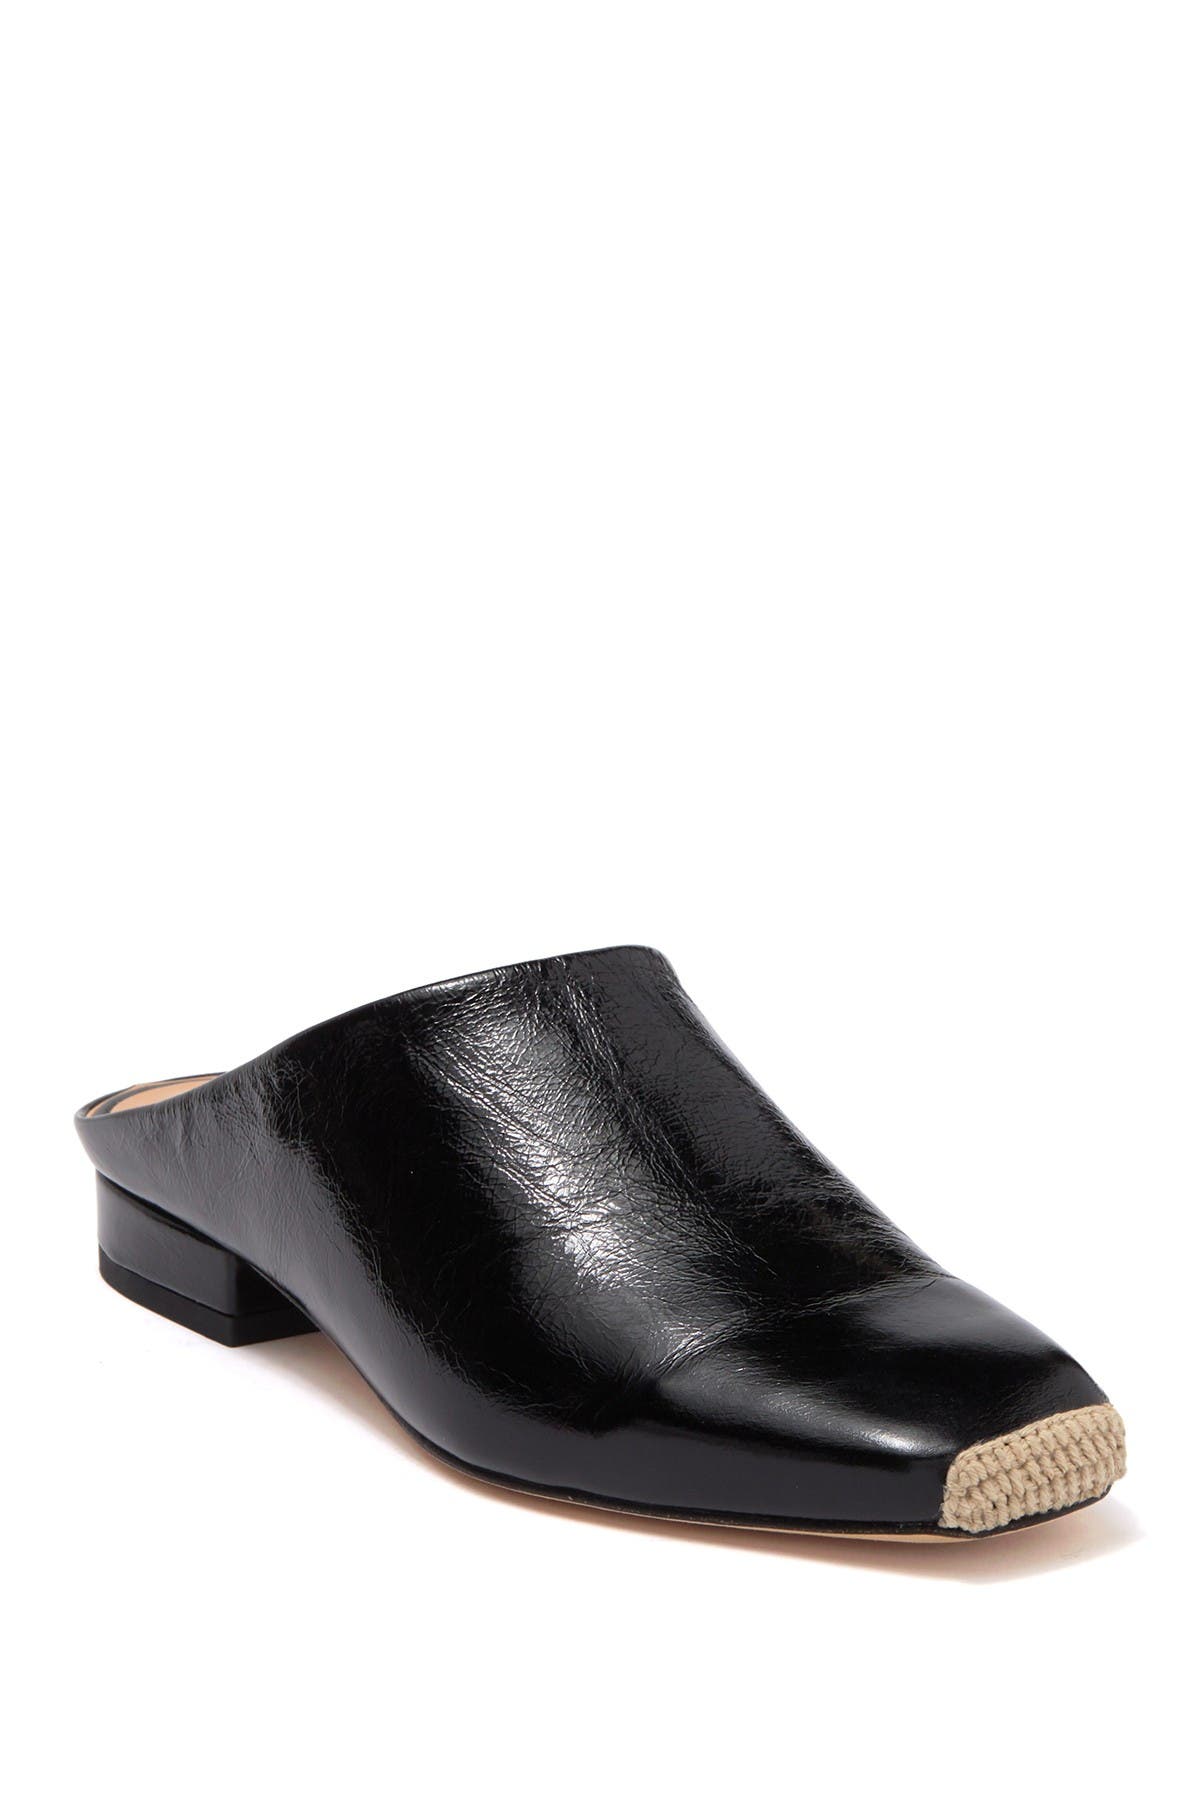 alice patent leather sandal